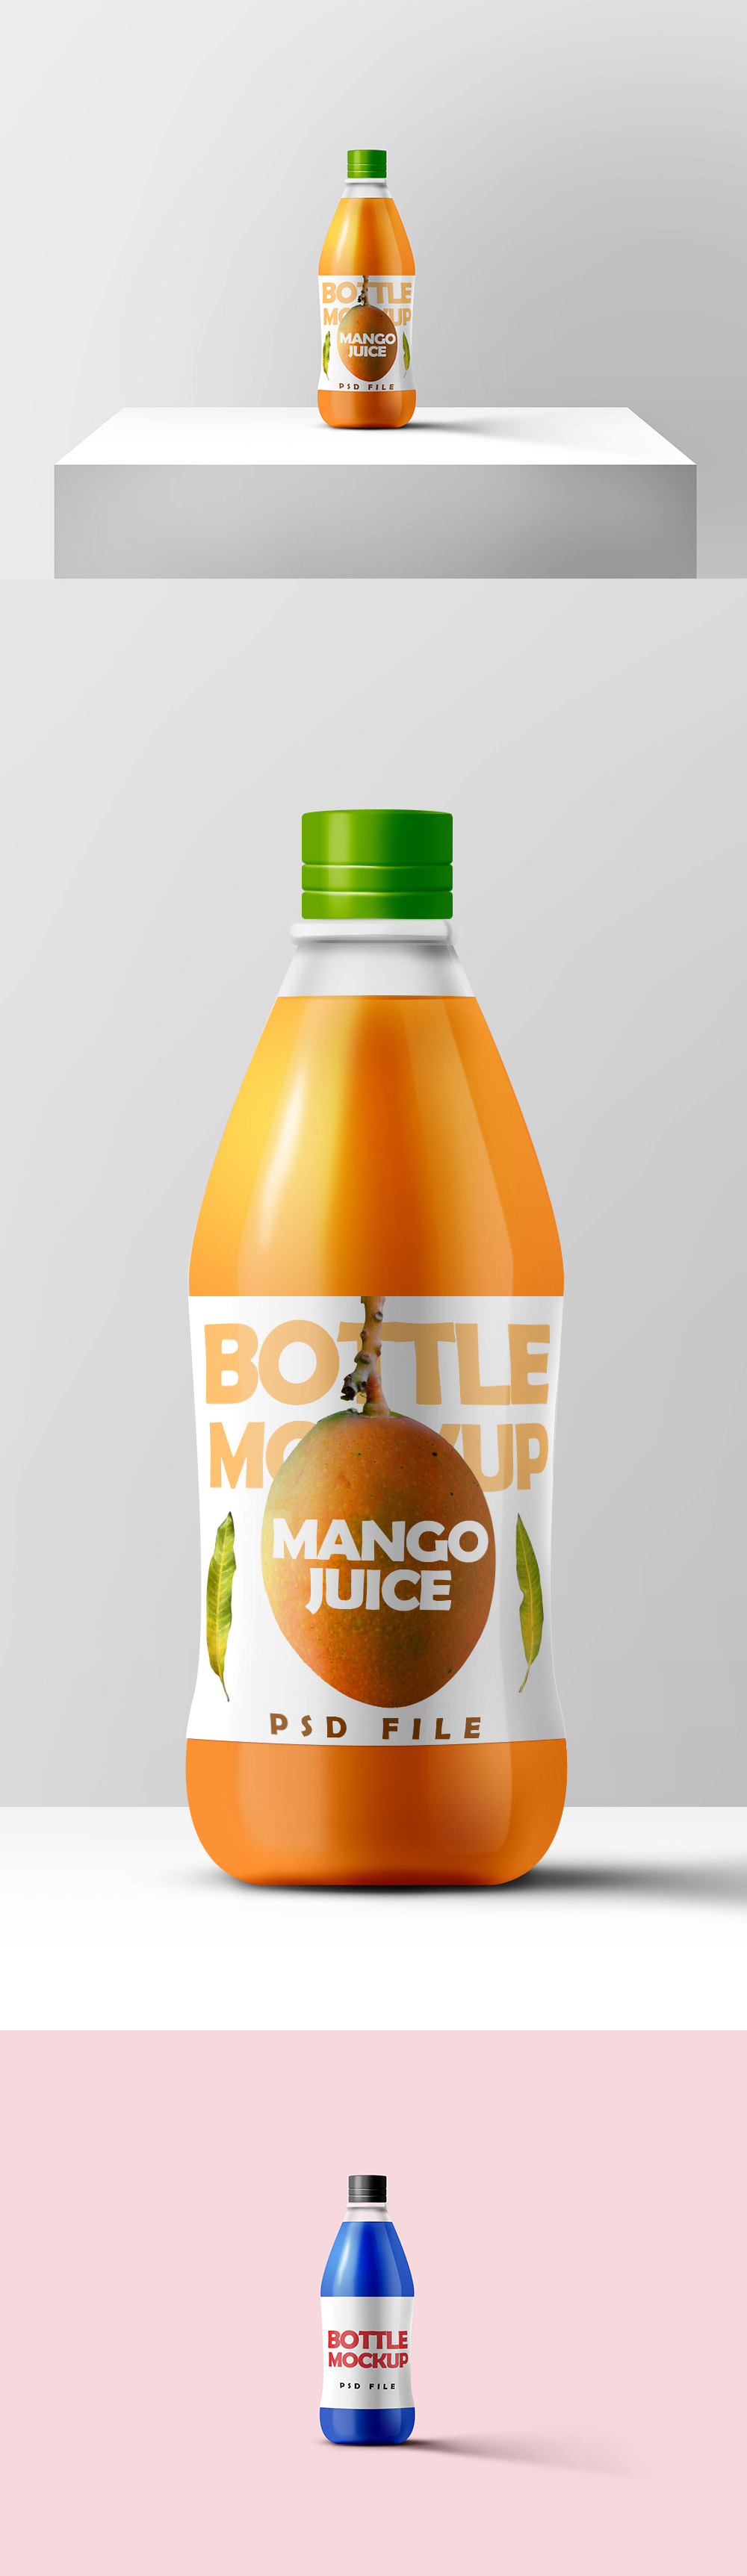 Download Juice Bottle Mockup Free PSD Template - LTHEME